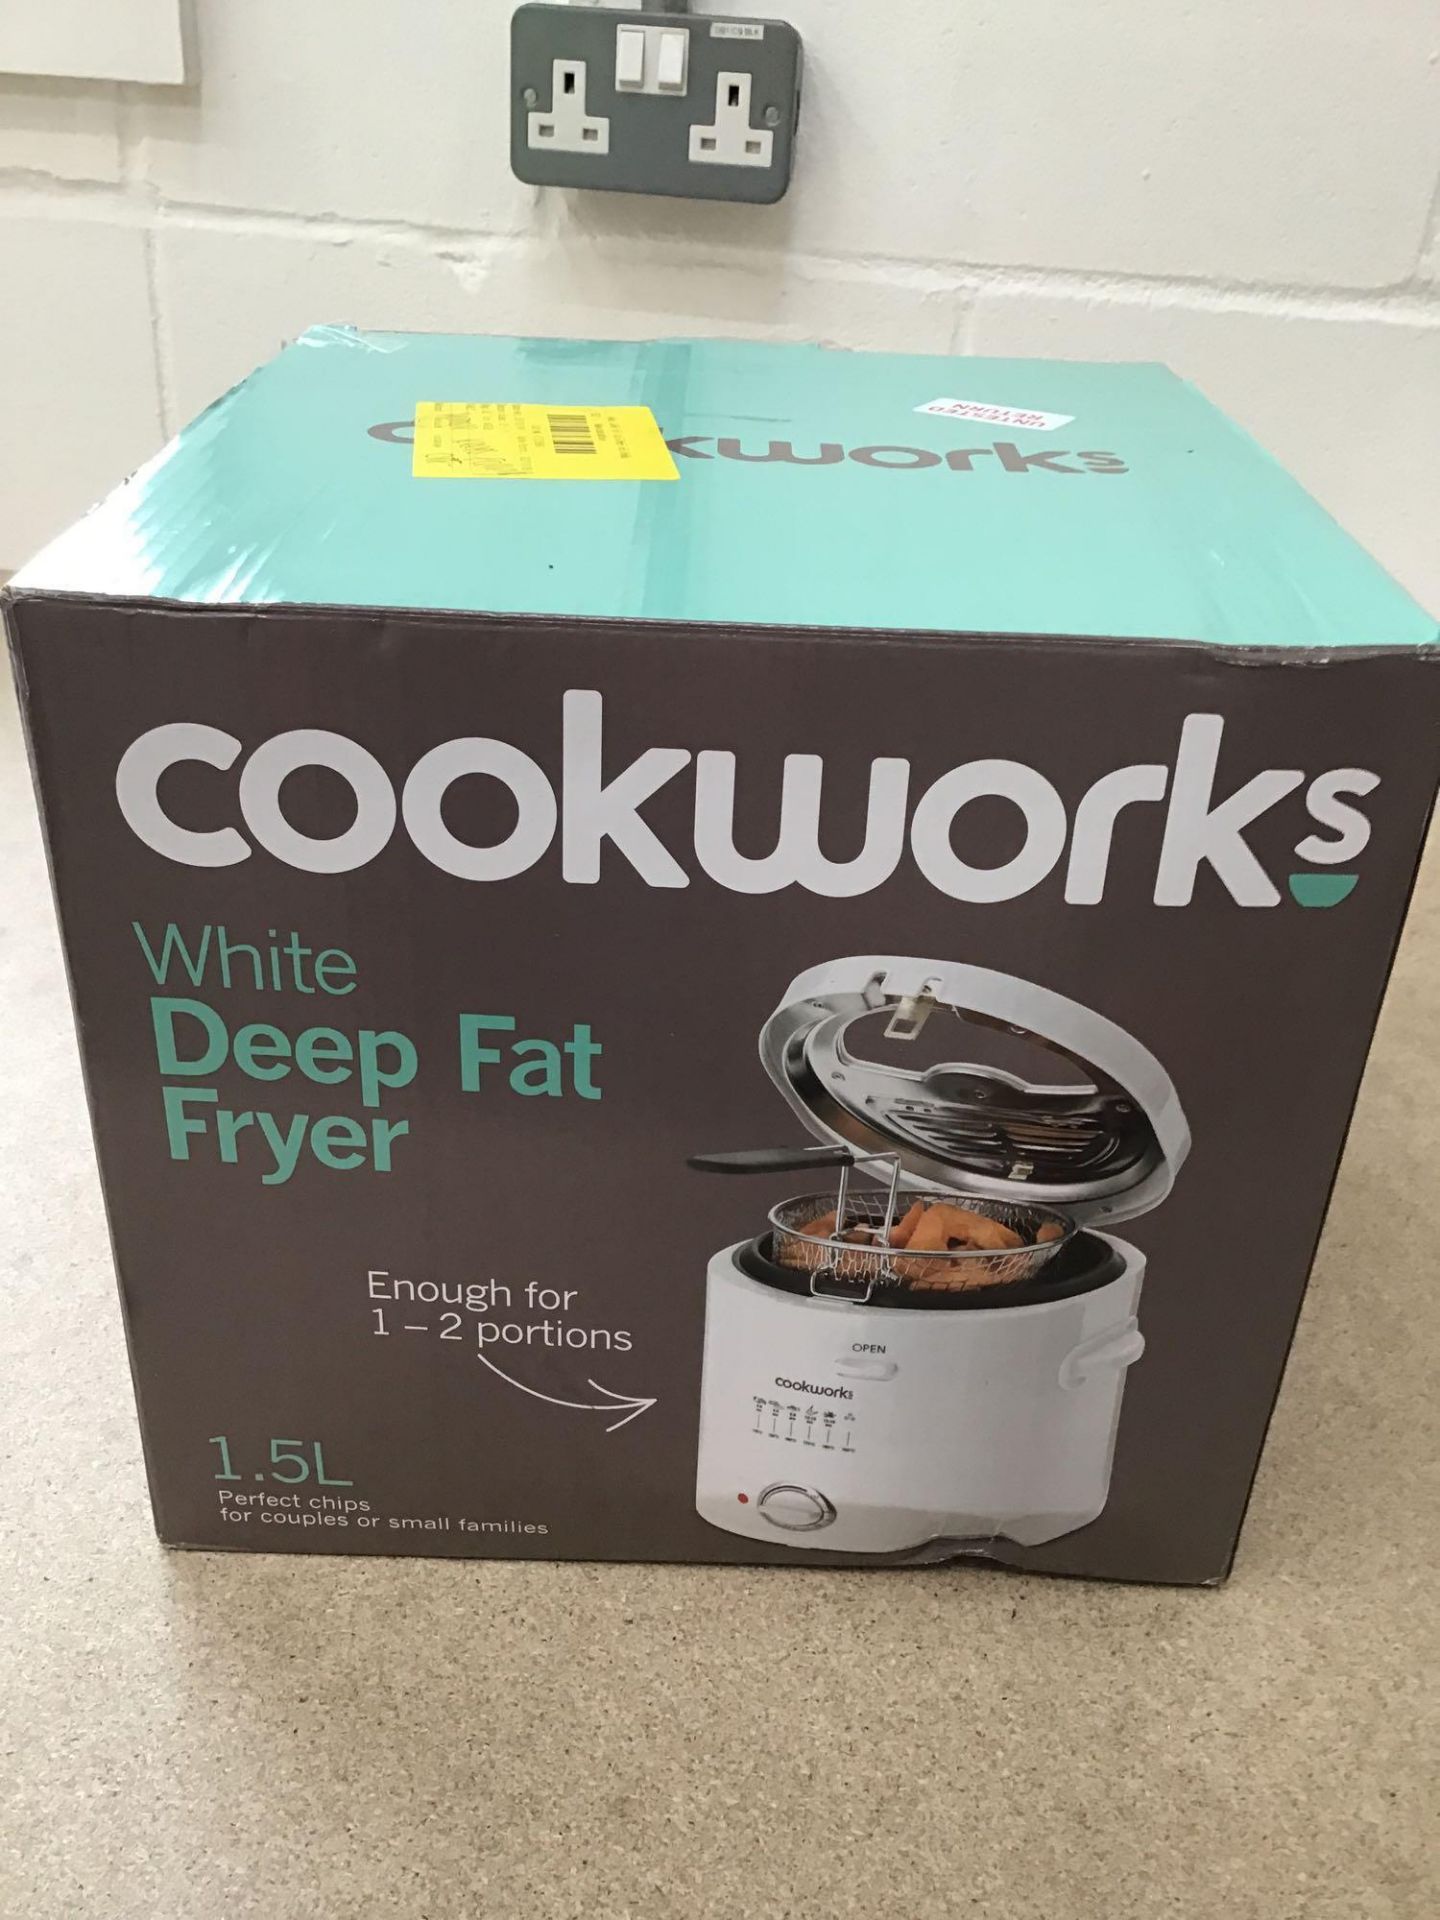 Cookworks 1.5L Deep Fat Fryer - White, £14.99 RRP - Image 3 of 5